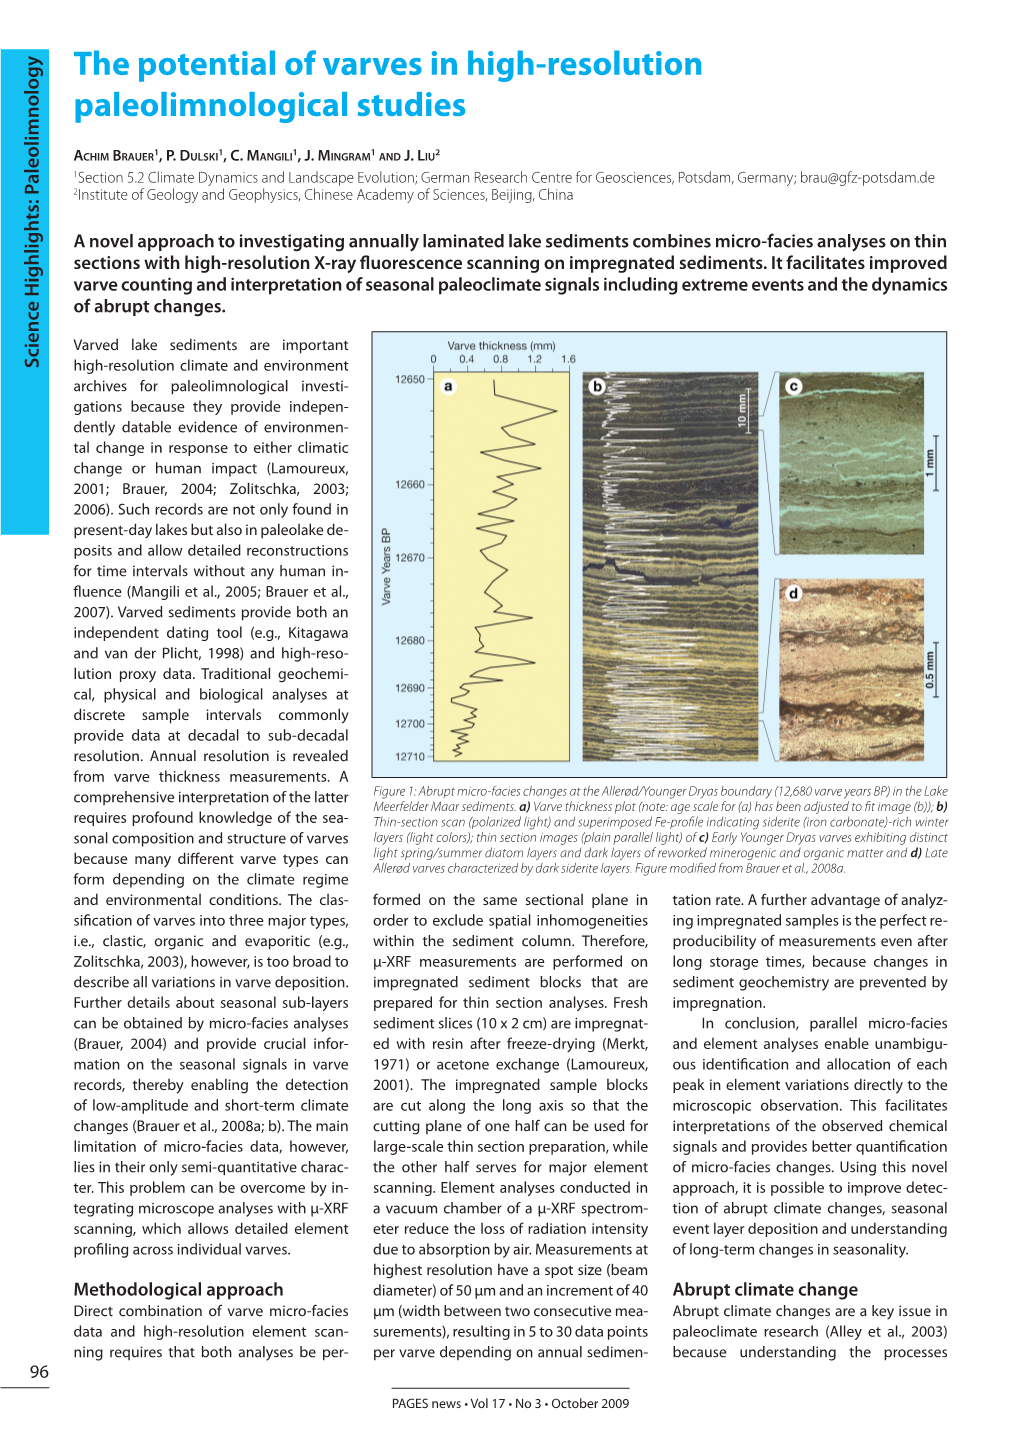 The Potential of Varves in High-Resolution Paleolimnological Studies